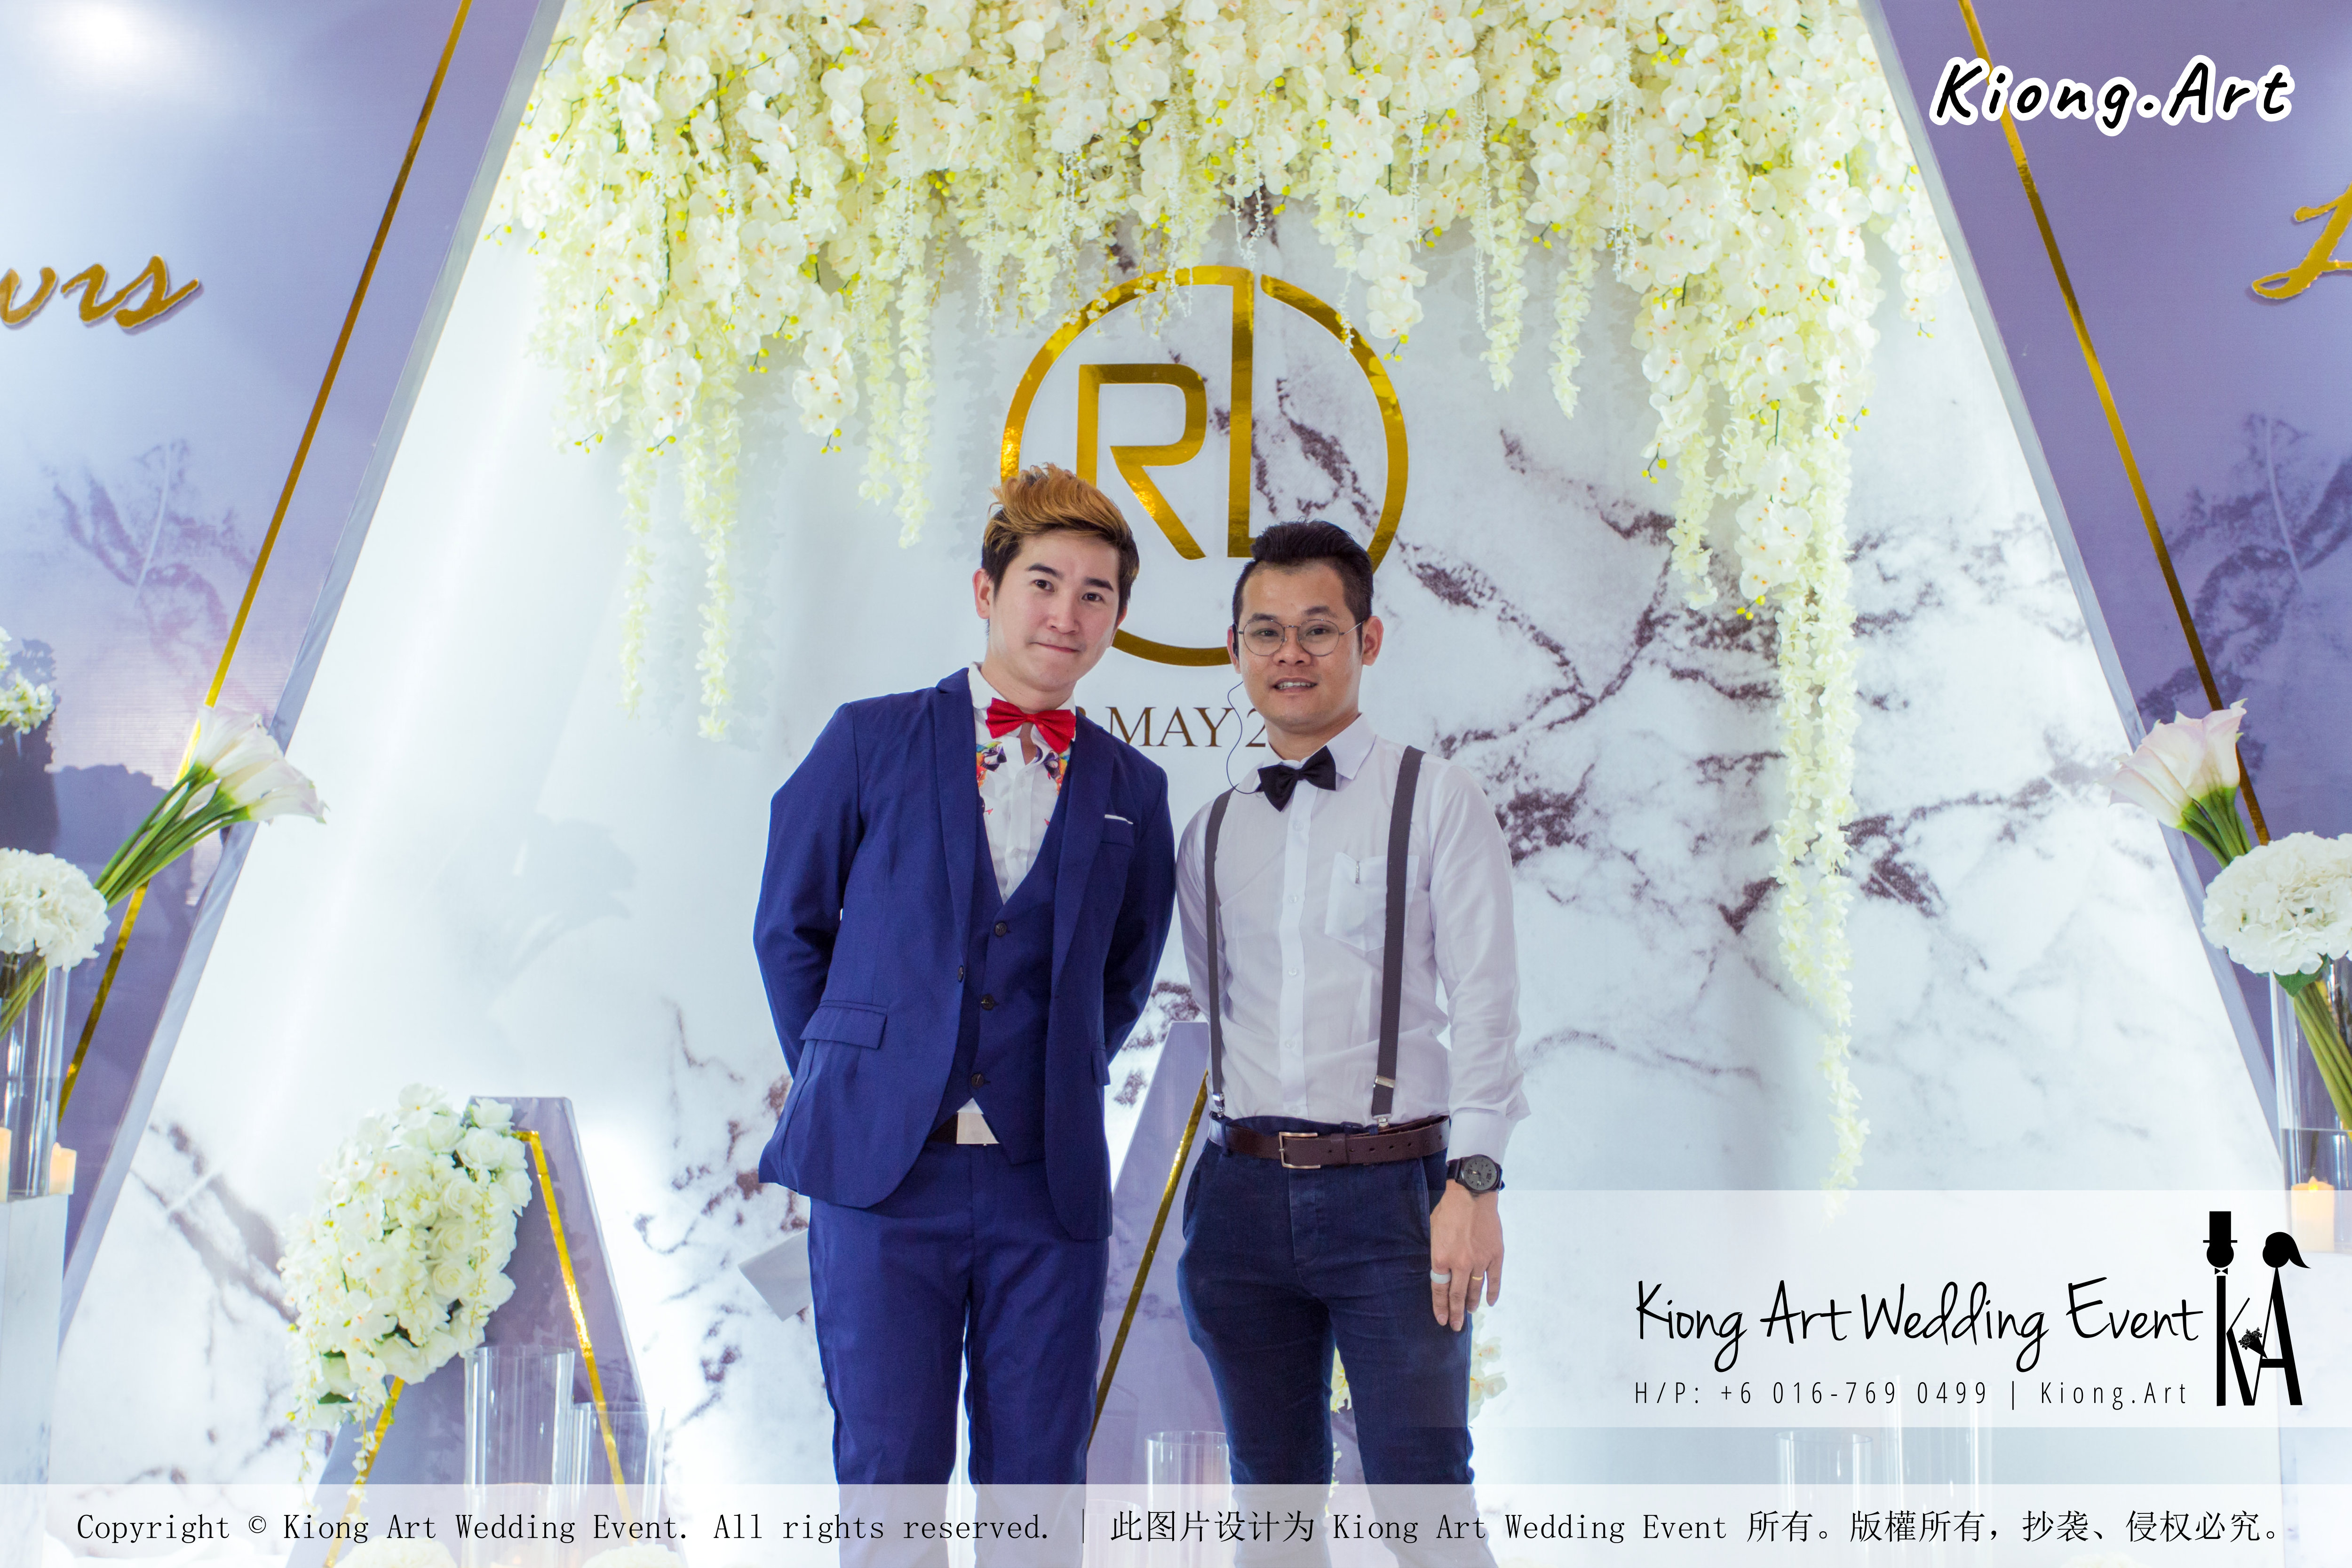 Kiong Art Wedding Event Kuala Lumpur Malaysia Event and Wedding DecorationCompany One-stop Wedding Planning Services Wedding Theme Live Band Wedding Photography Videography A03-26